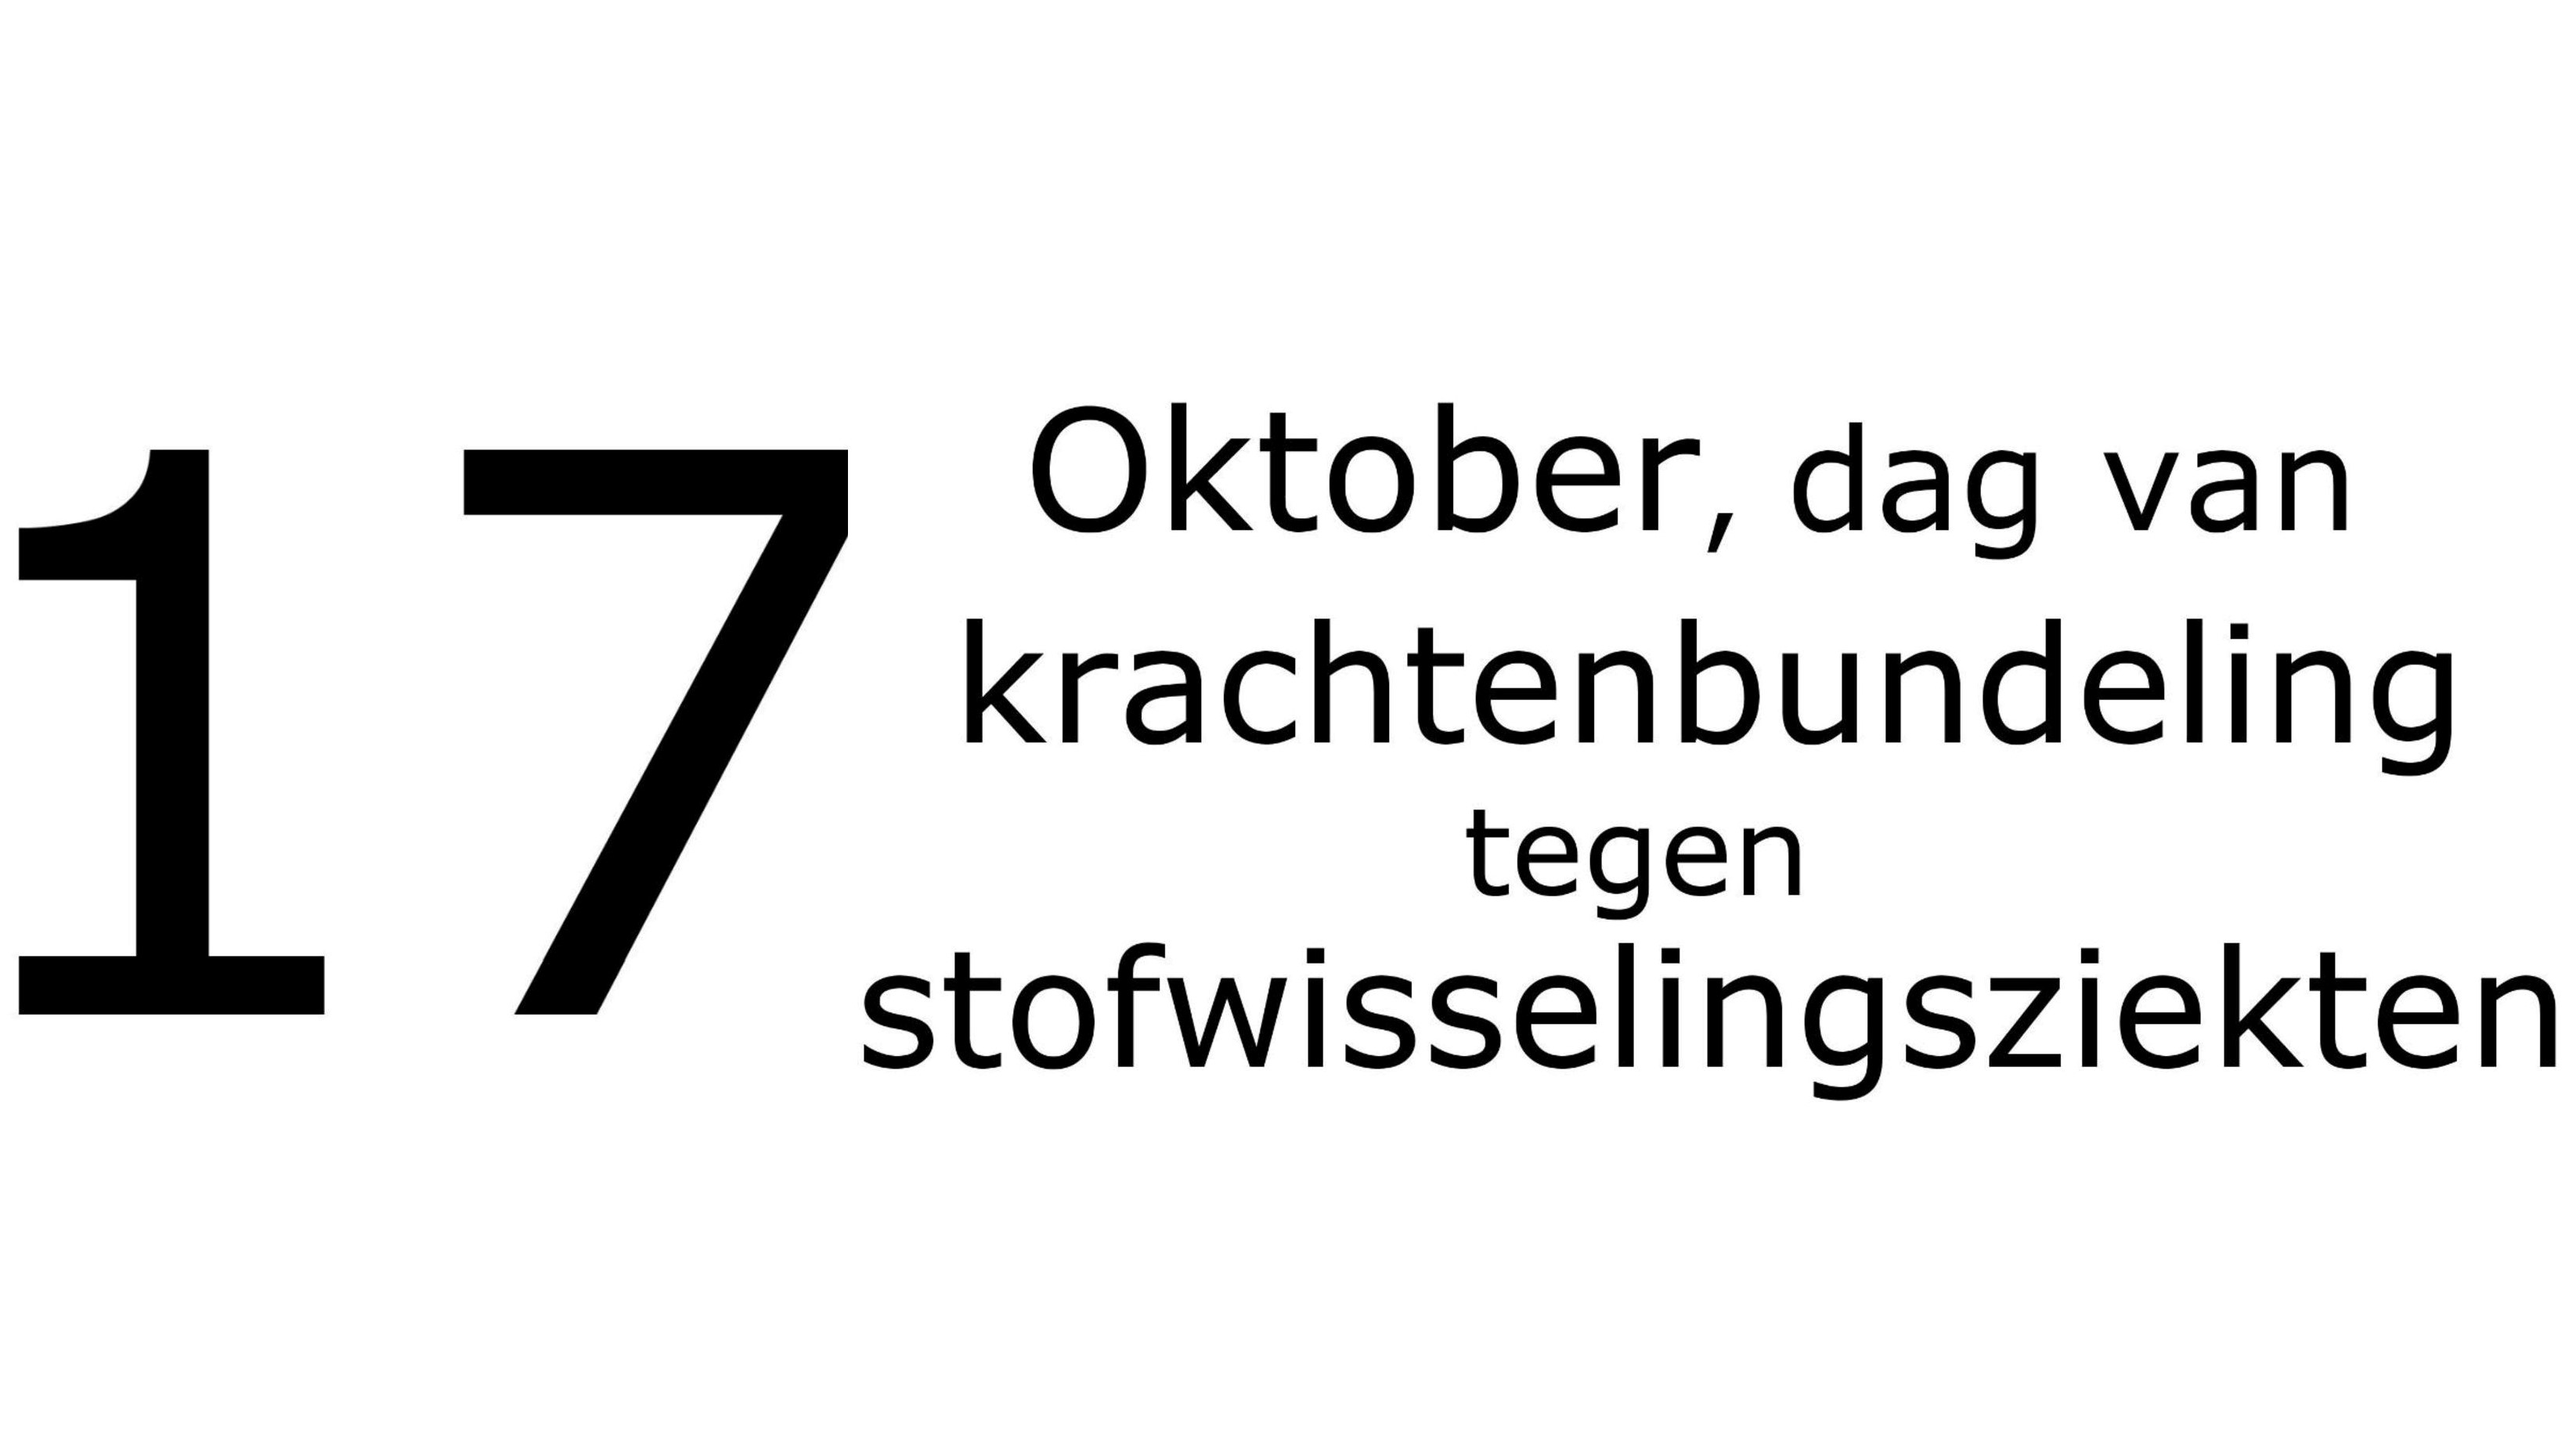 zwart wit logo 17 oktober